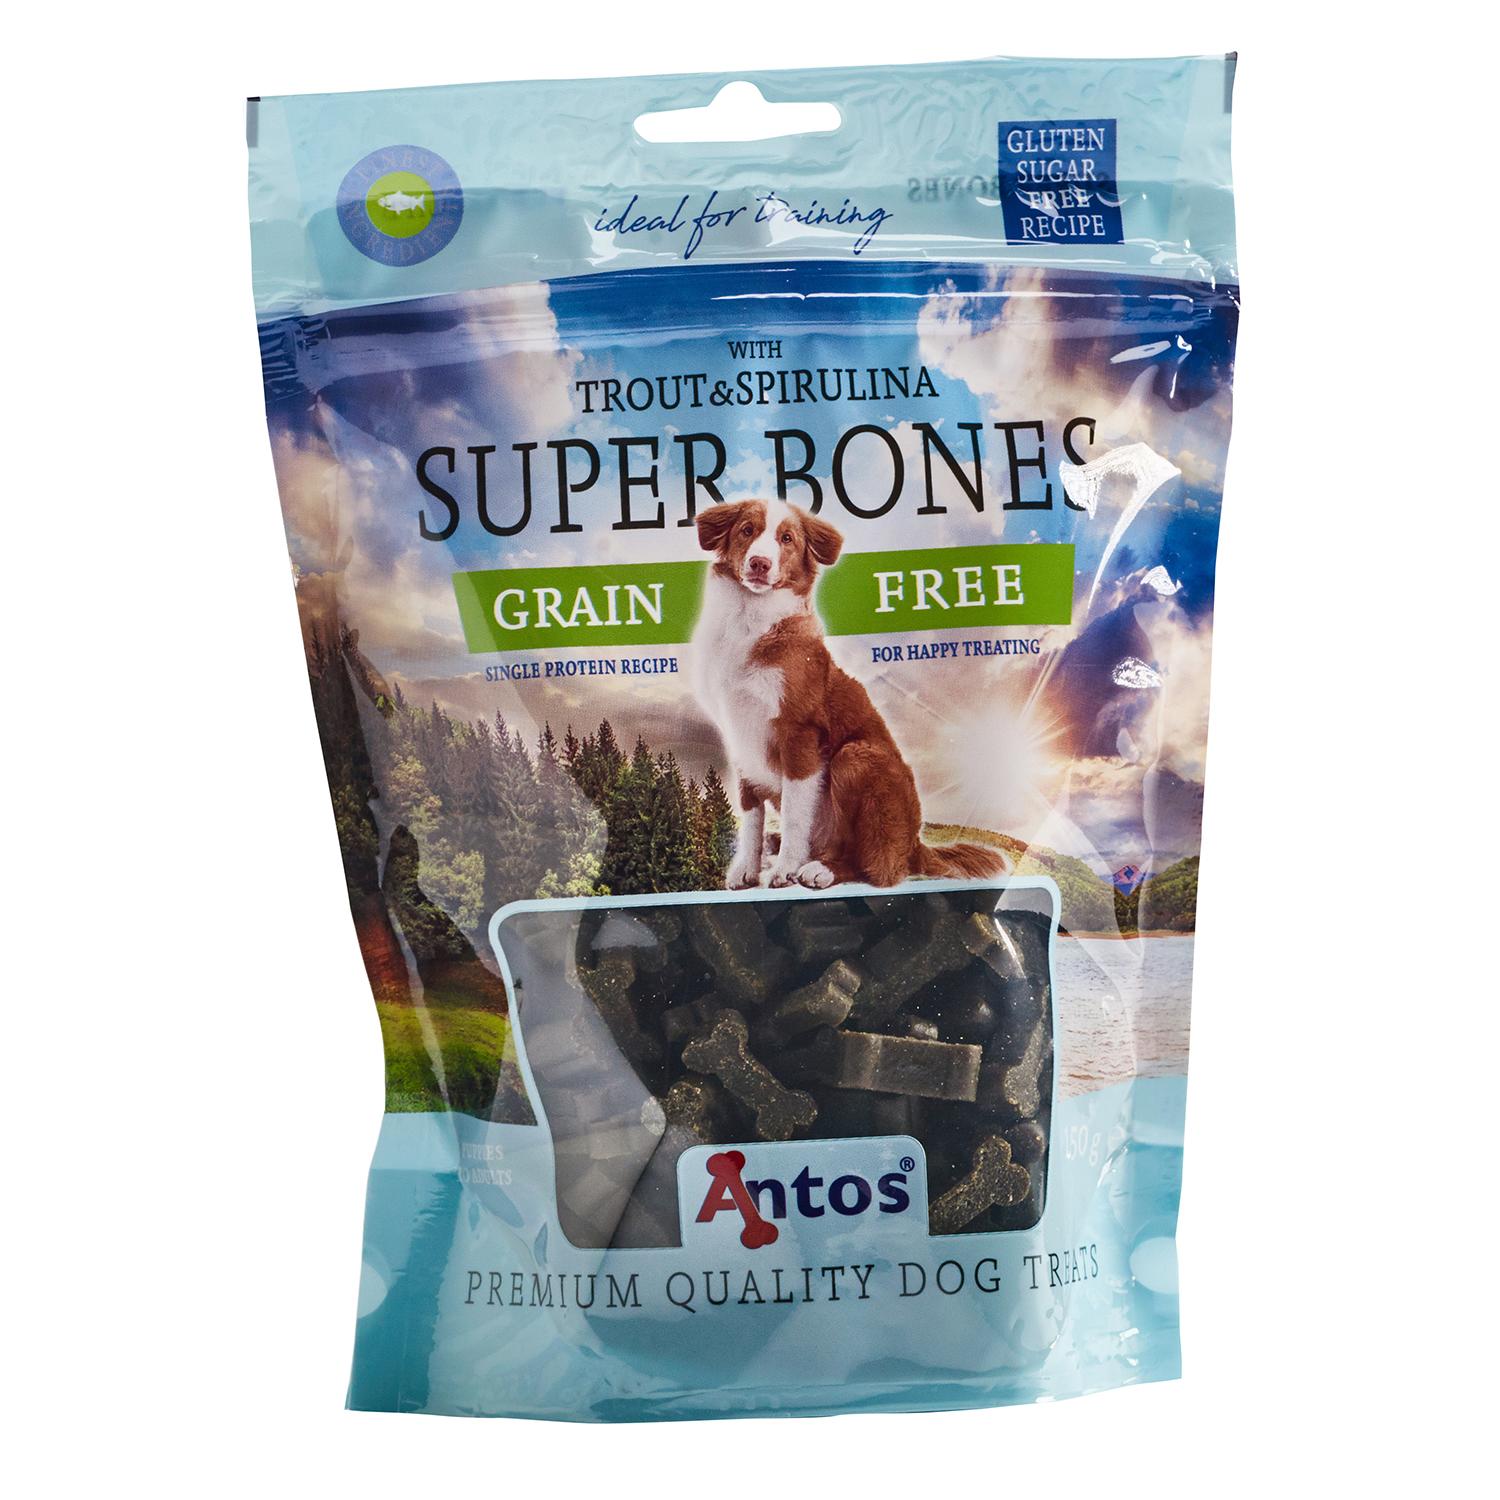 Antos Trout and spirulina Super bones Dog Training Treats